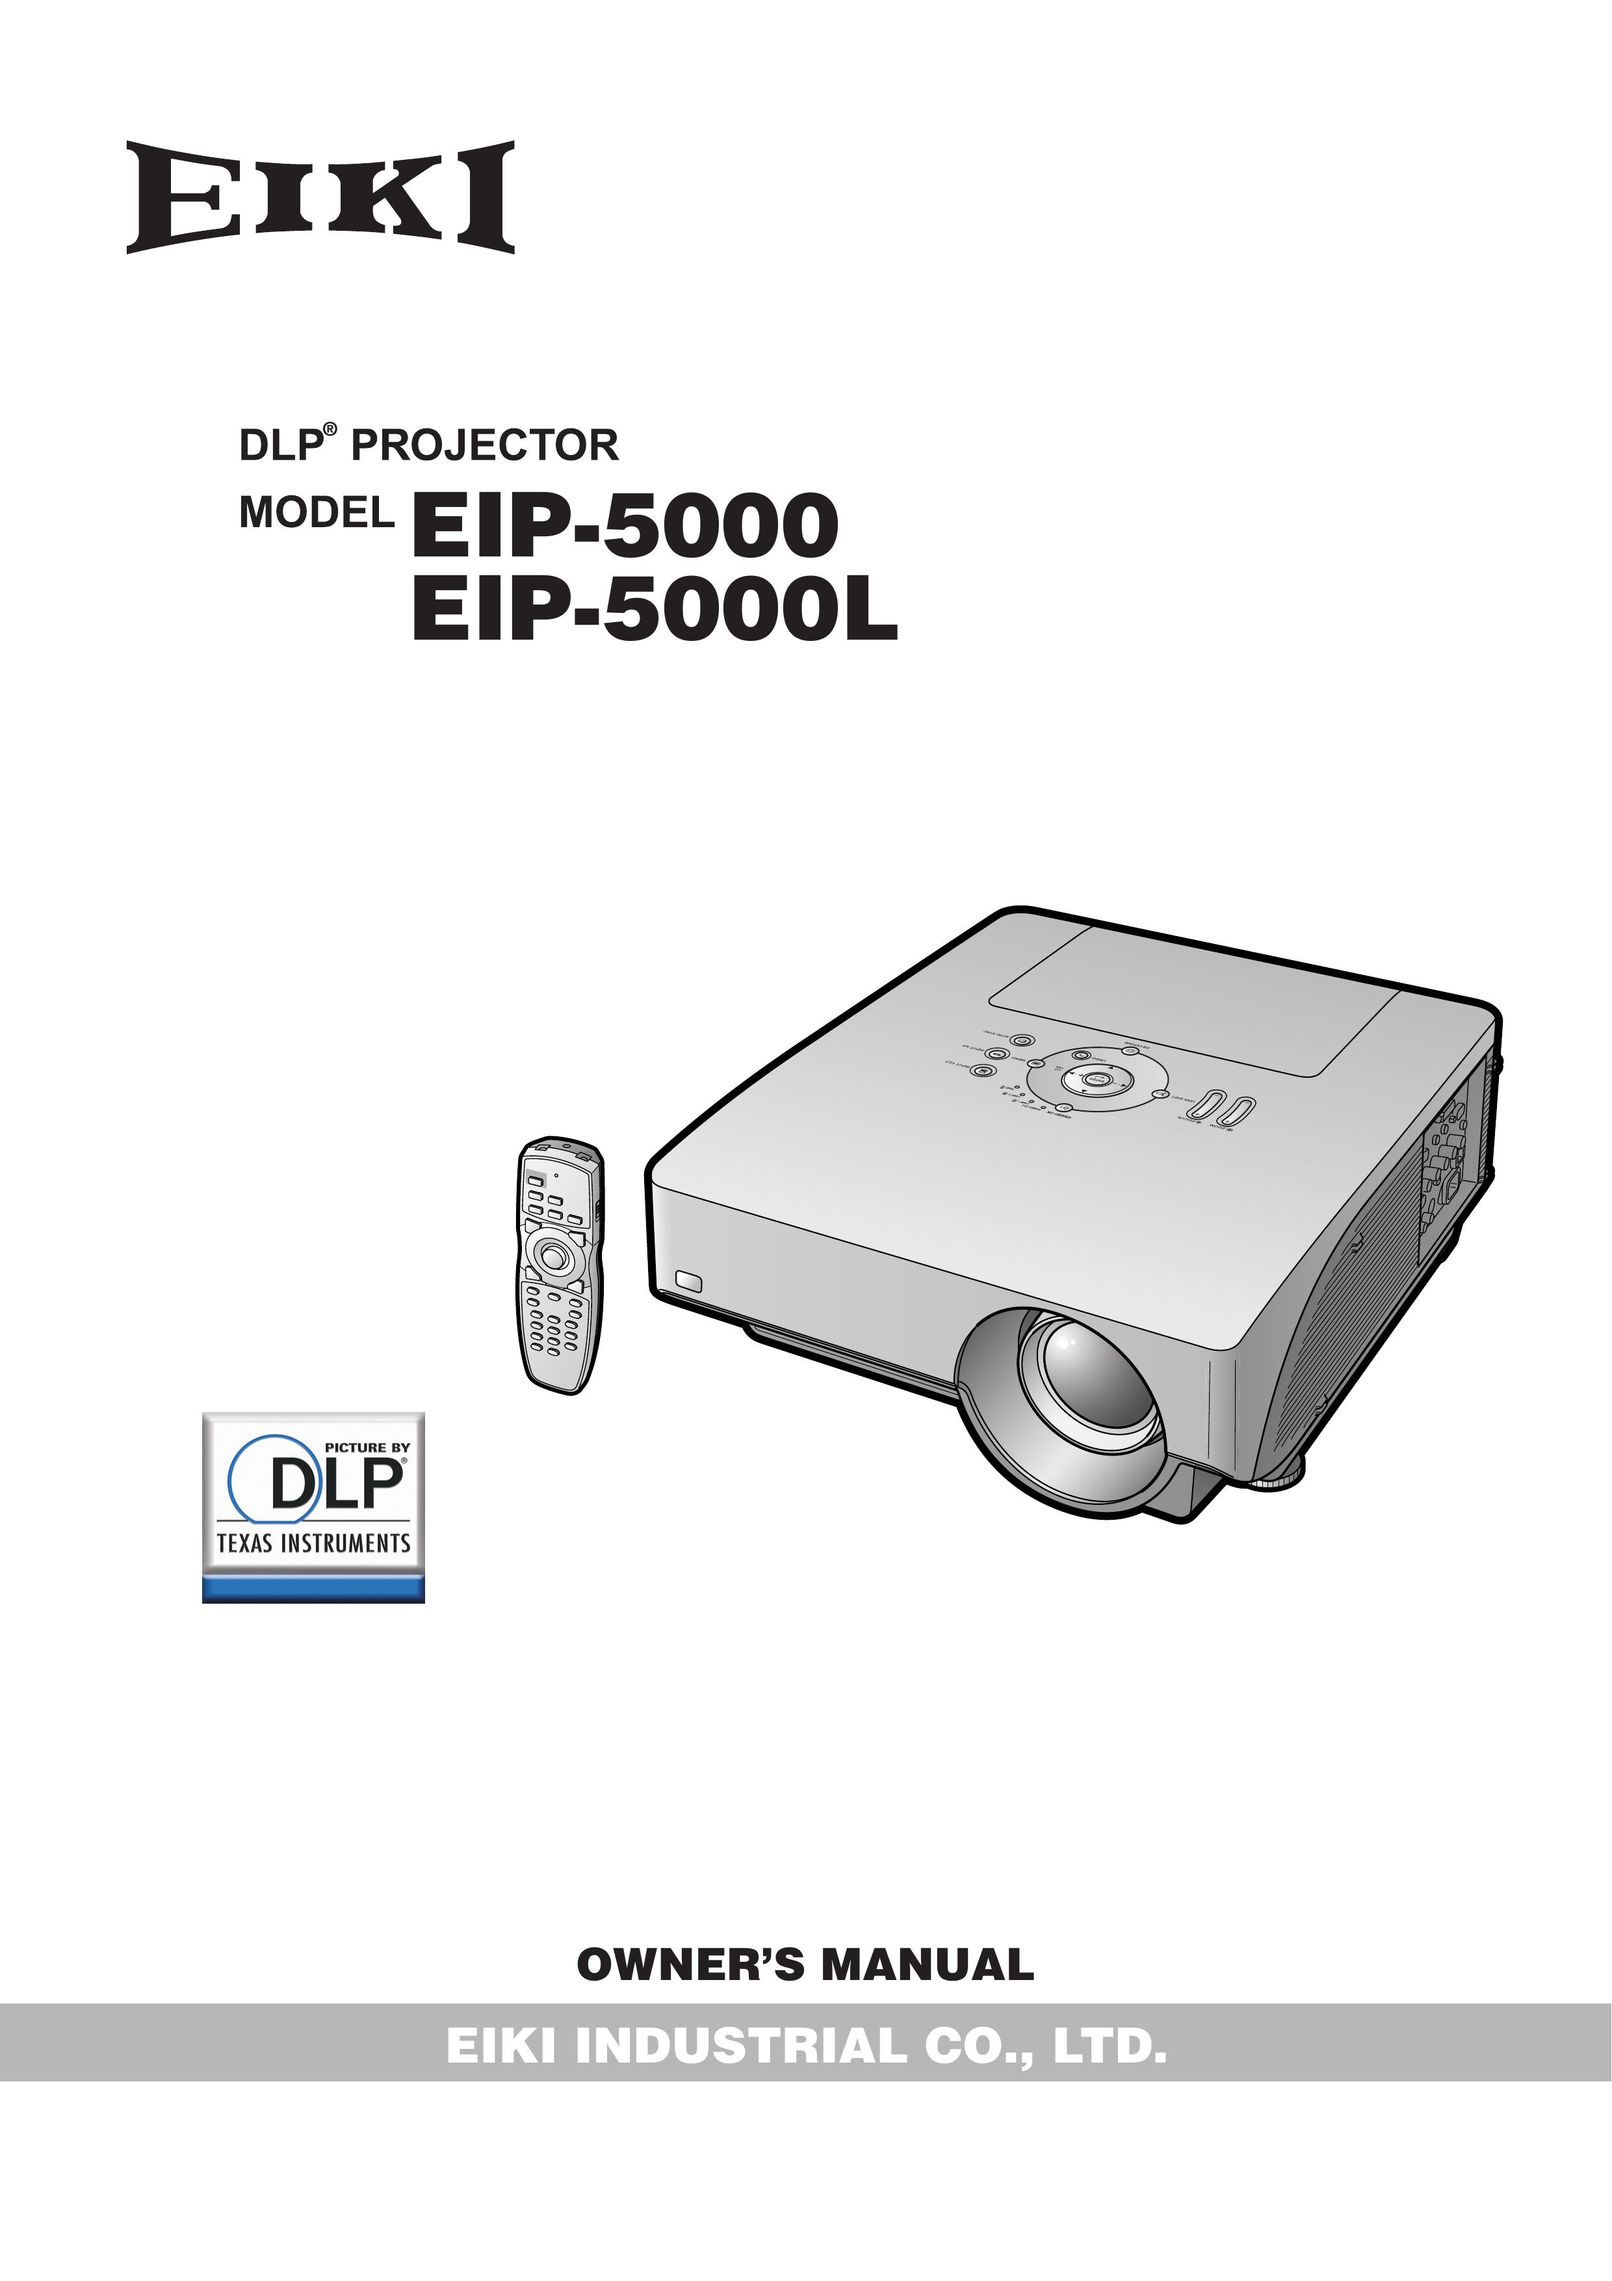 Eiki EIP-5000L Projector User Manual